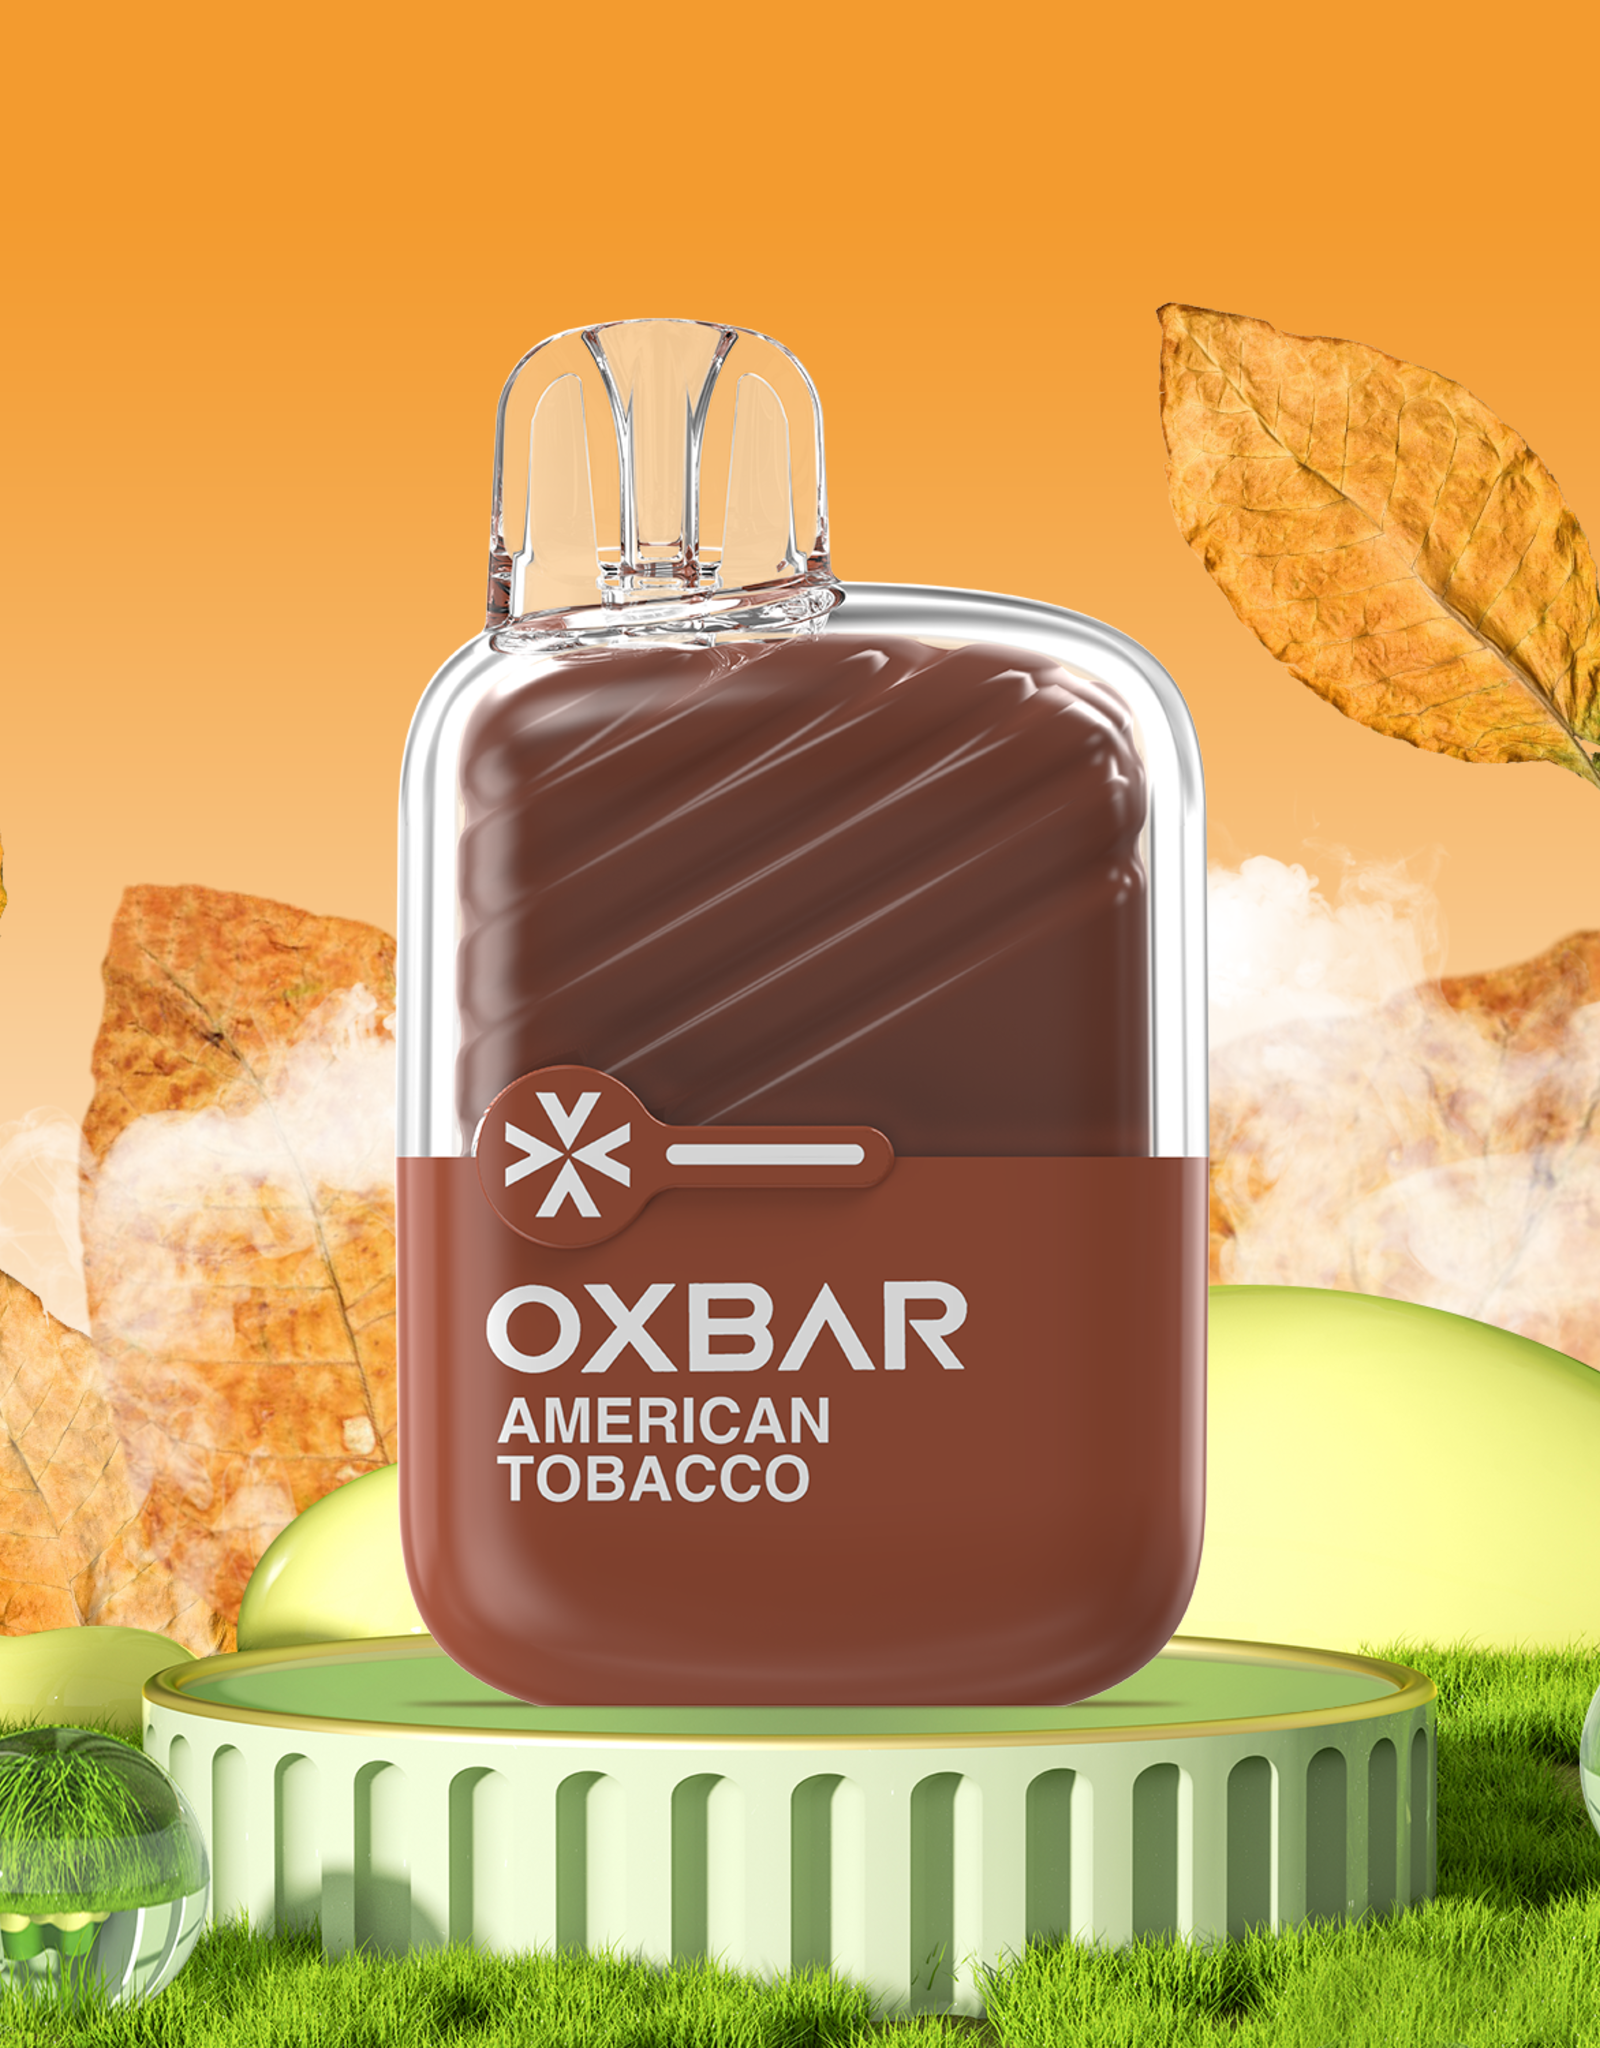 OxBar Oxbar Mini 1200